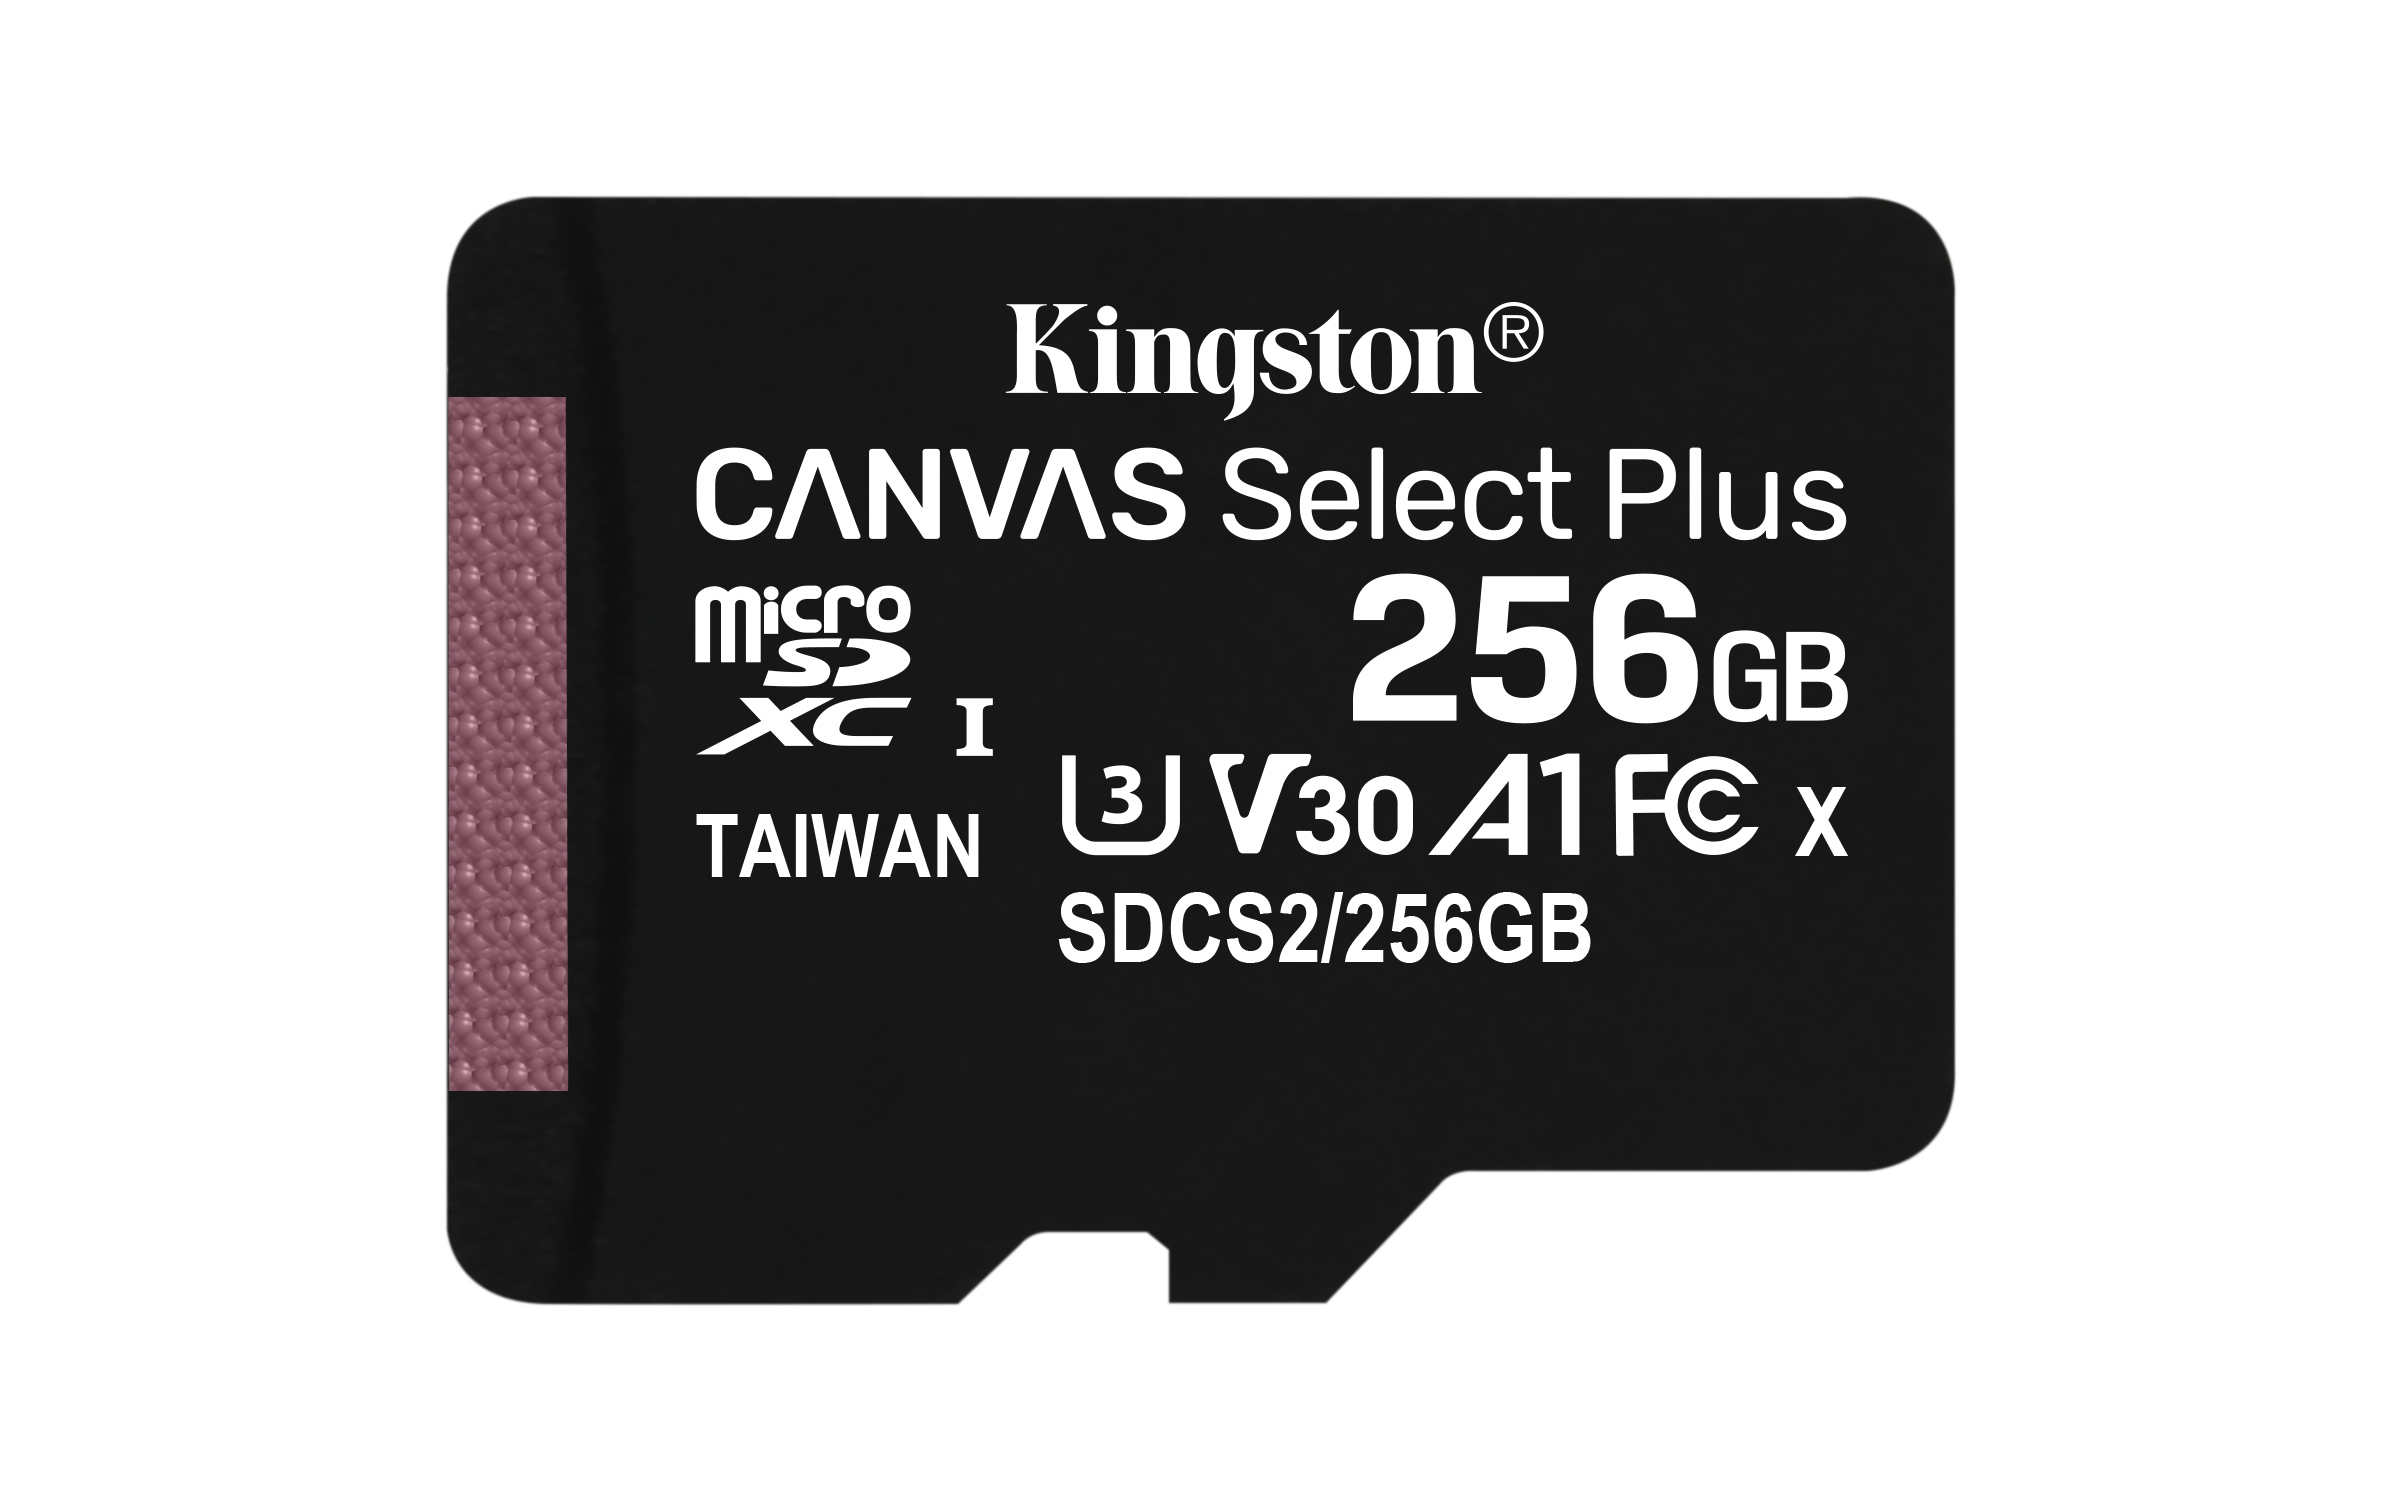 Kingston C10 U3-A1 Canvas Select Plus 256GB MicroSDXC Memory Card 100R